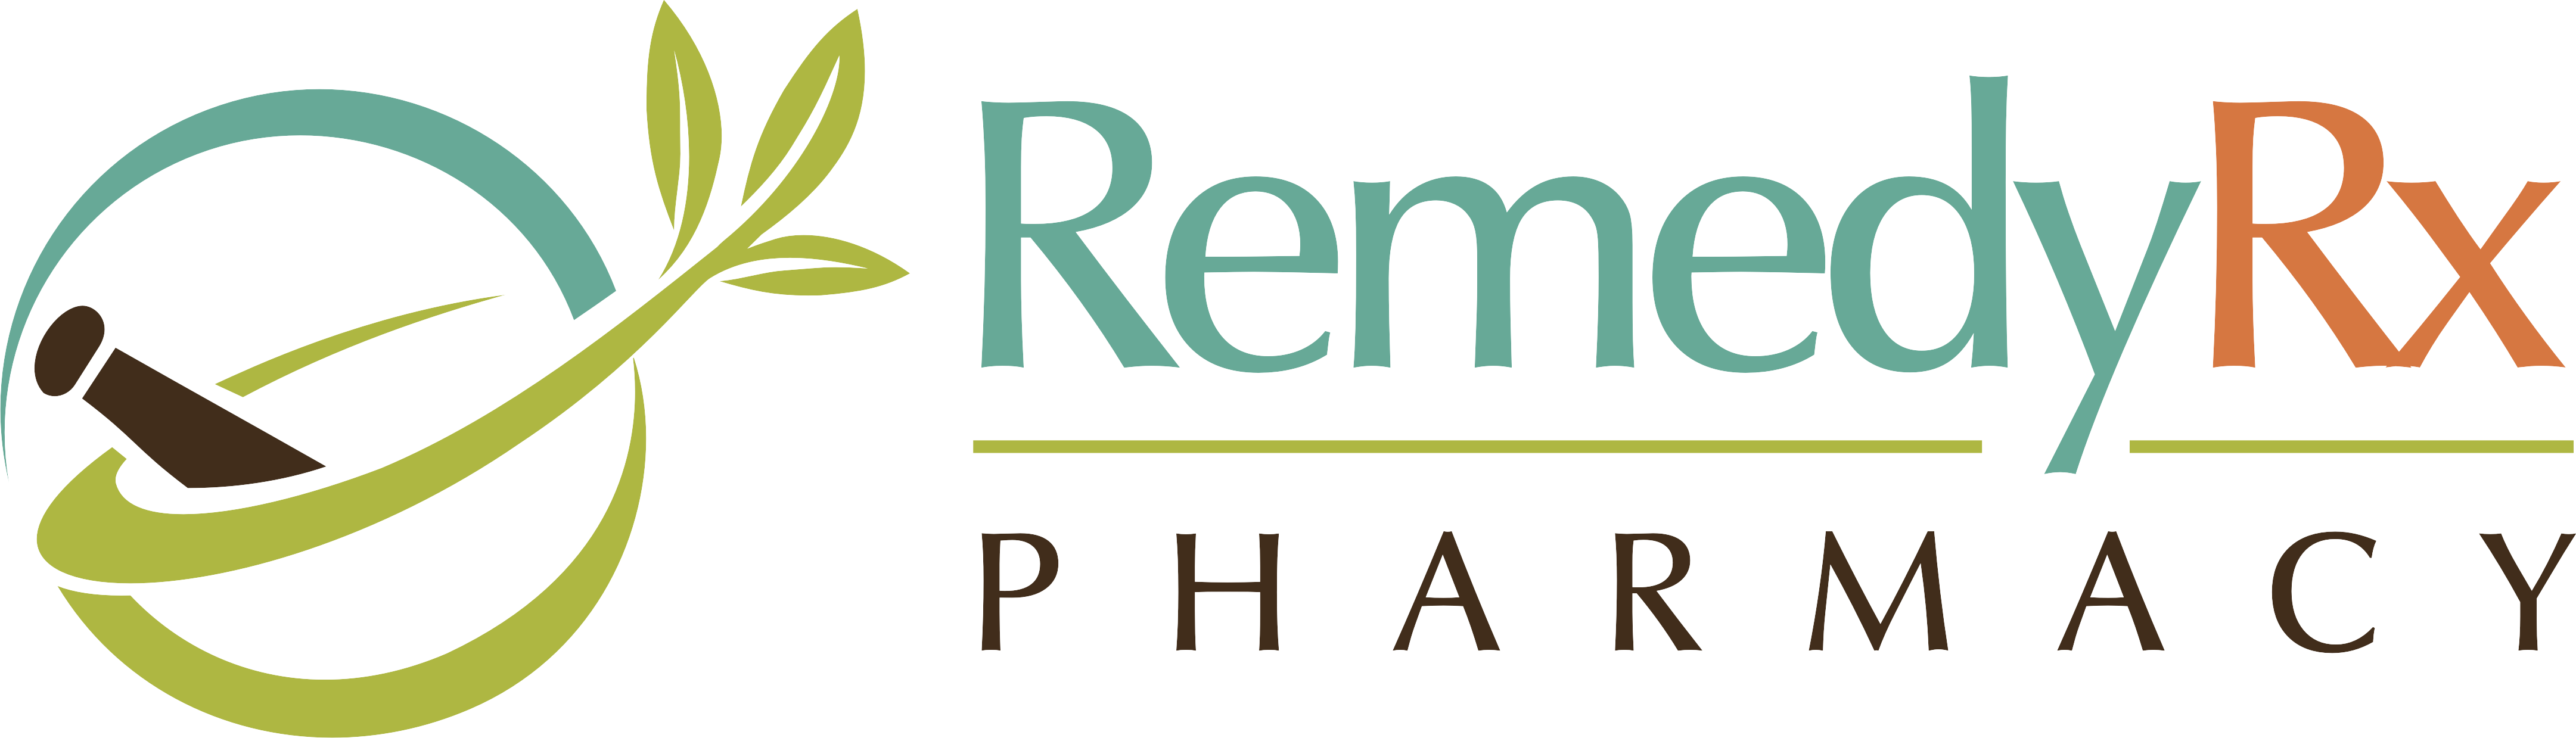 Remedy Rx Pharmacy – Remedy Rx Pharmacy & Compounding Logo